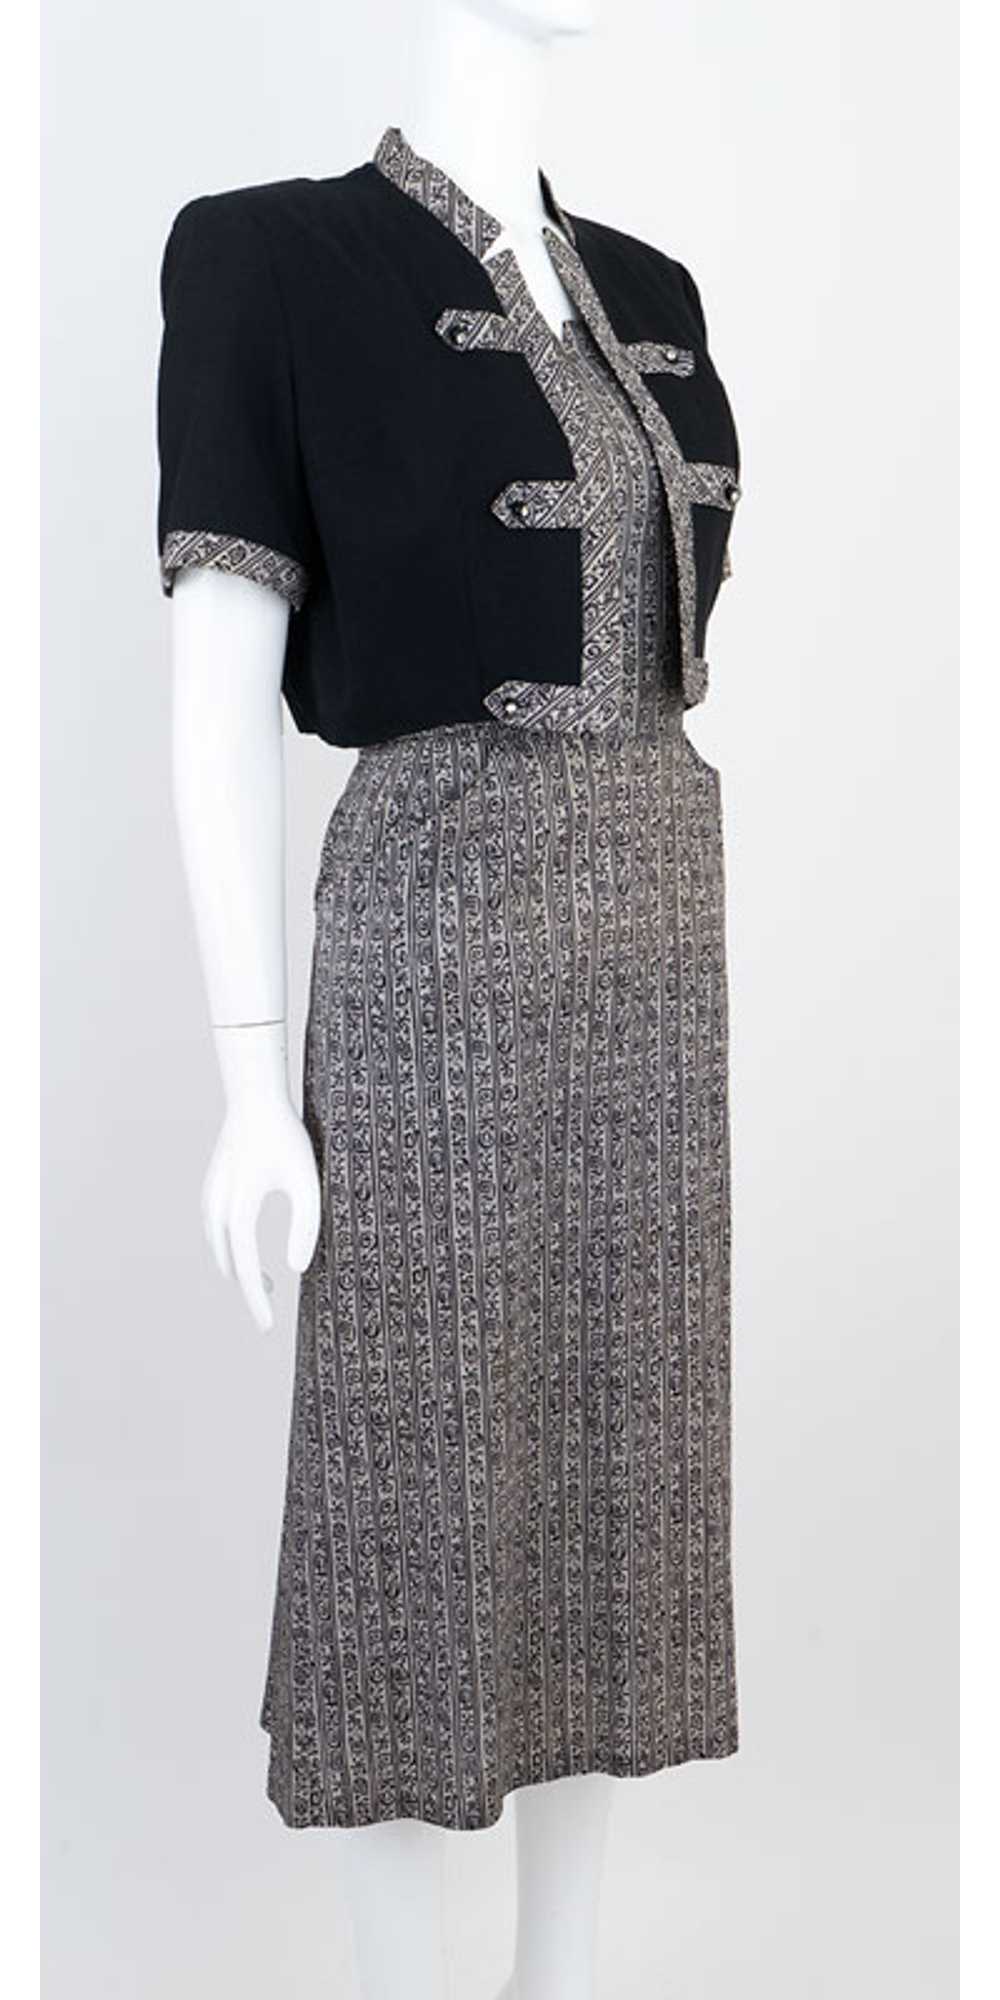 Fab 1950s Novelty Print Dress - image 3